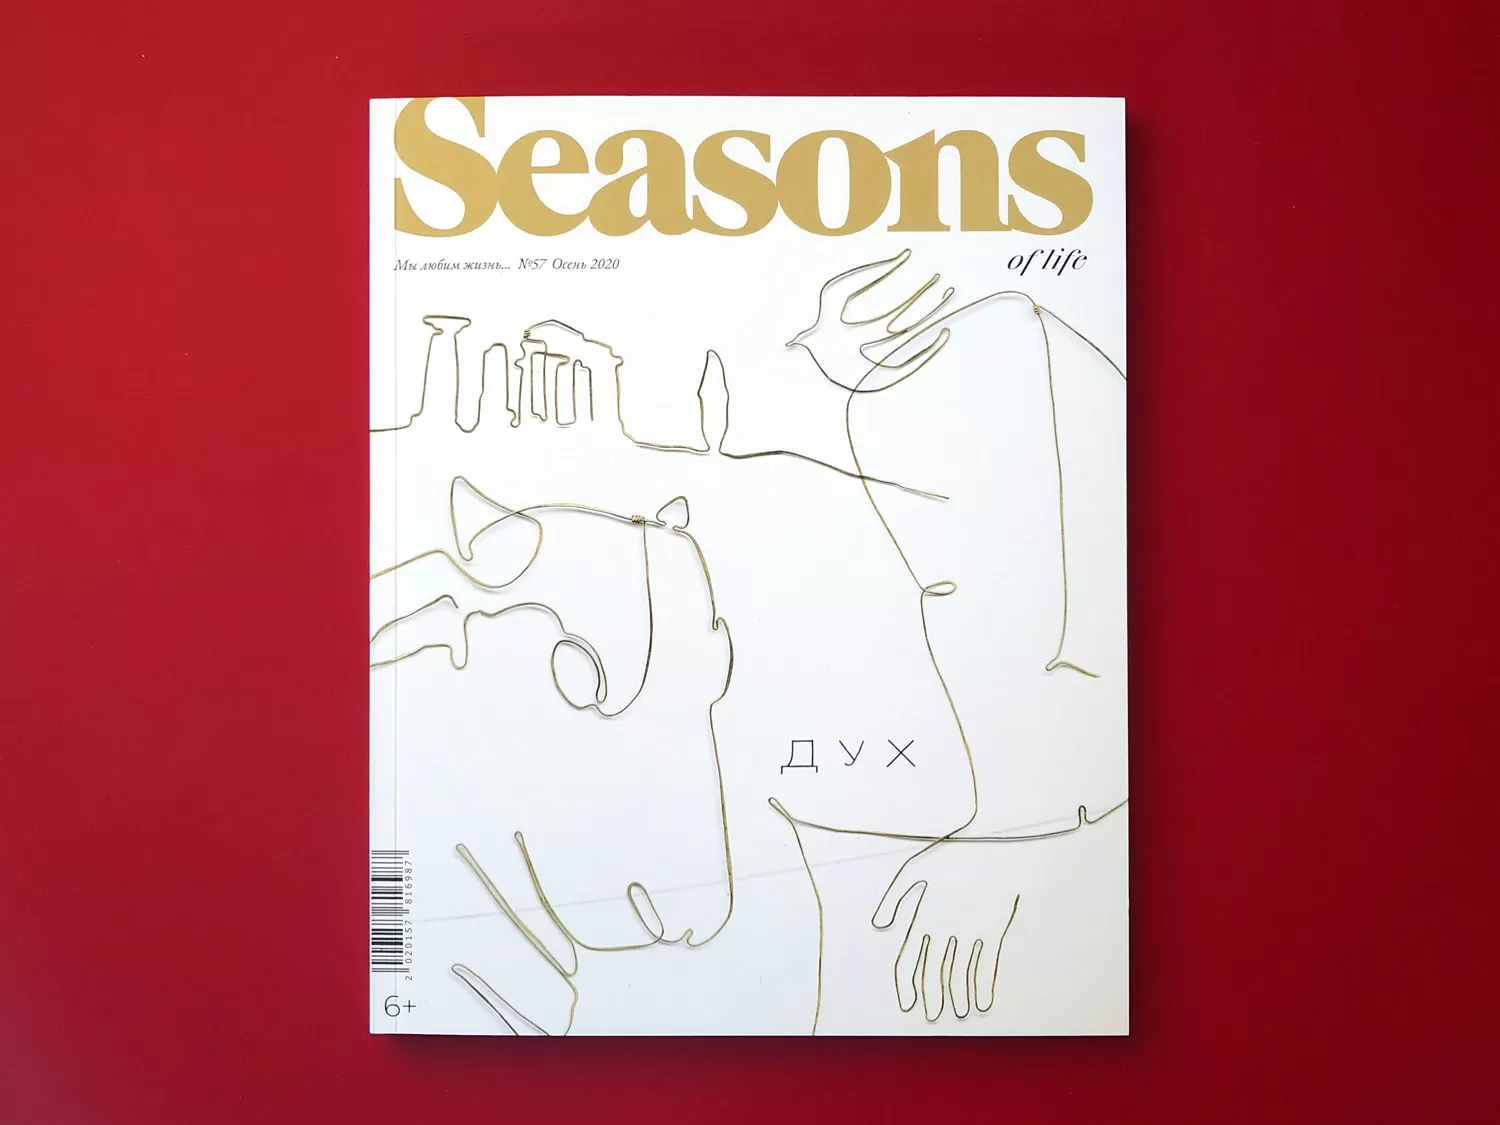 Журнал Seasons of life №57 осень 2020